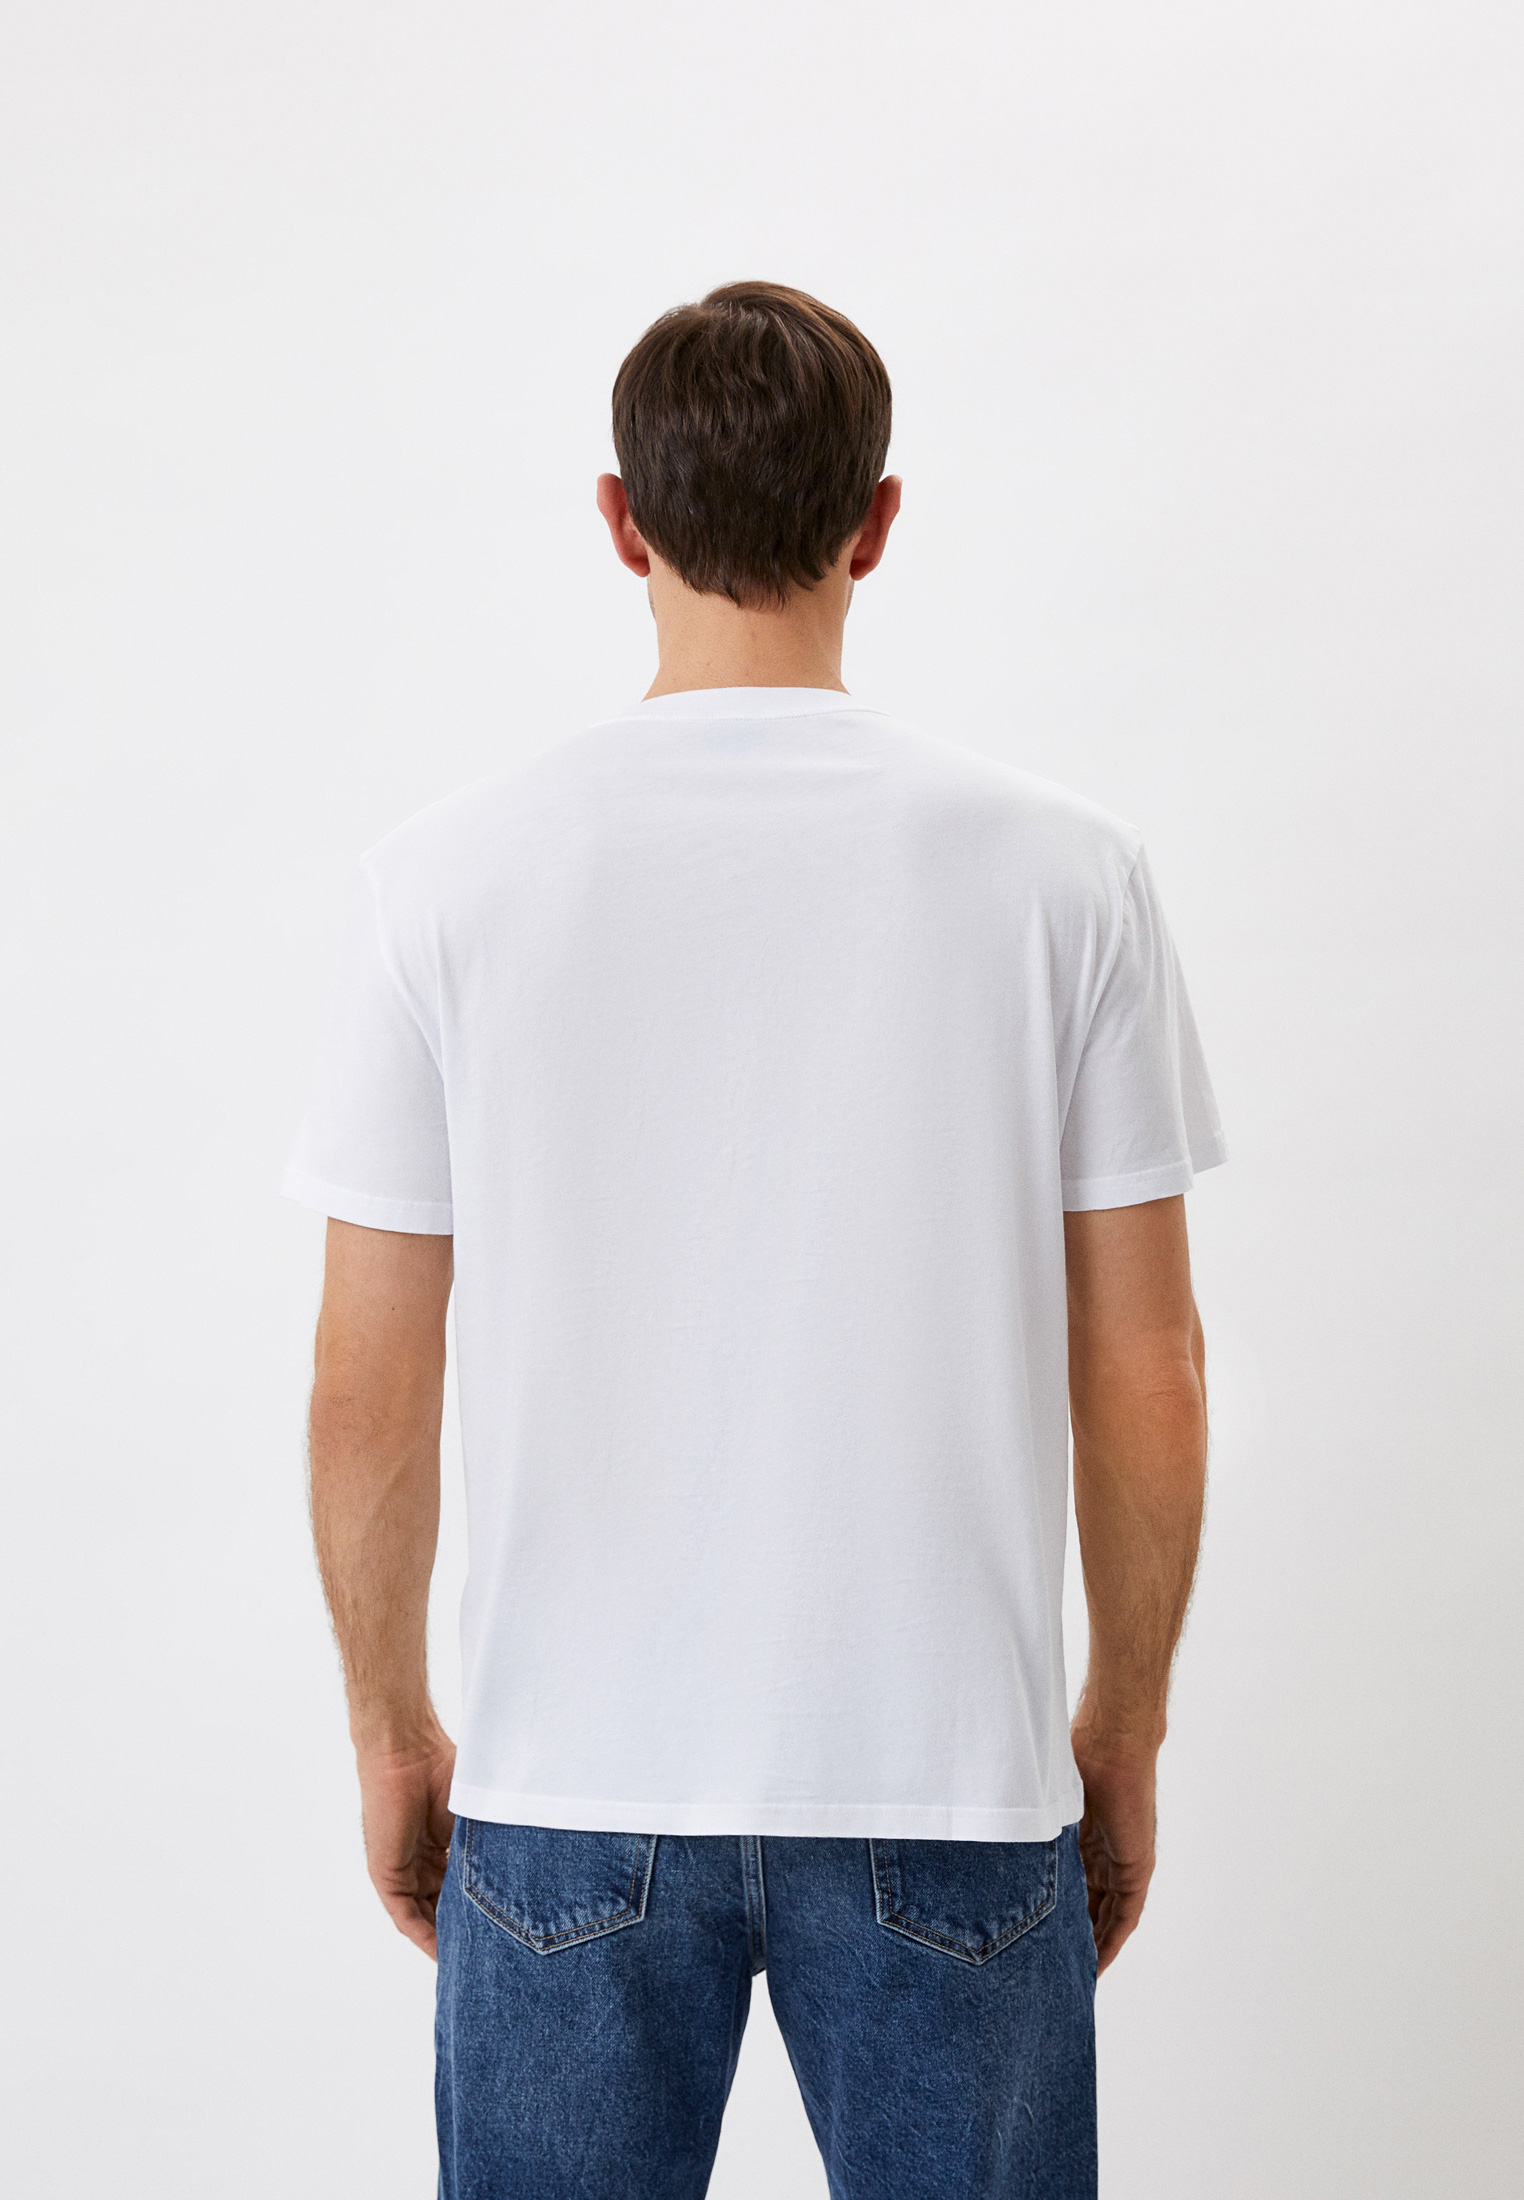 Мужская футболка Just Cavalli (Джаст Кавалли) S03GC0659N20663: изображение 3